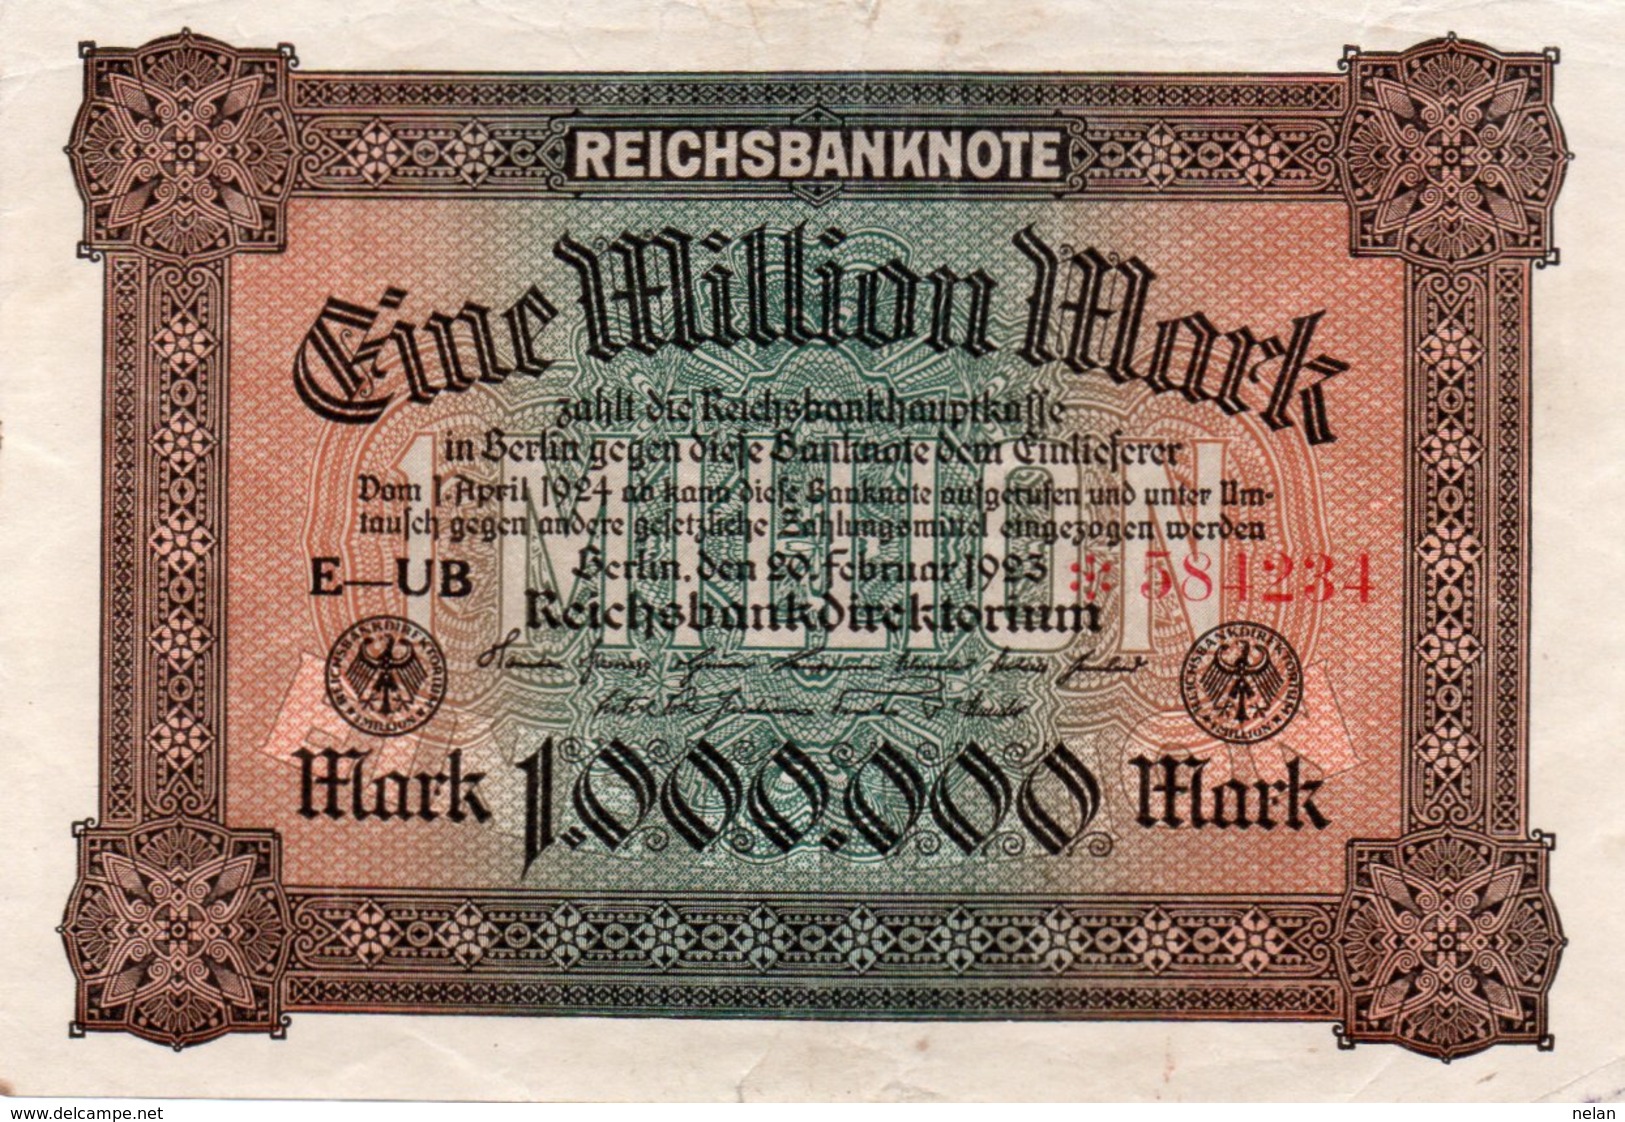 GERMANIA-REICHSBANKNOTE-1 MILL MARK 1923-  P-86a    XF++ UNIFACE  CON ASTERISC RARISSIMA - 1 Million Mark